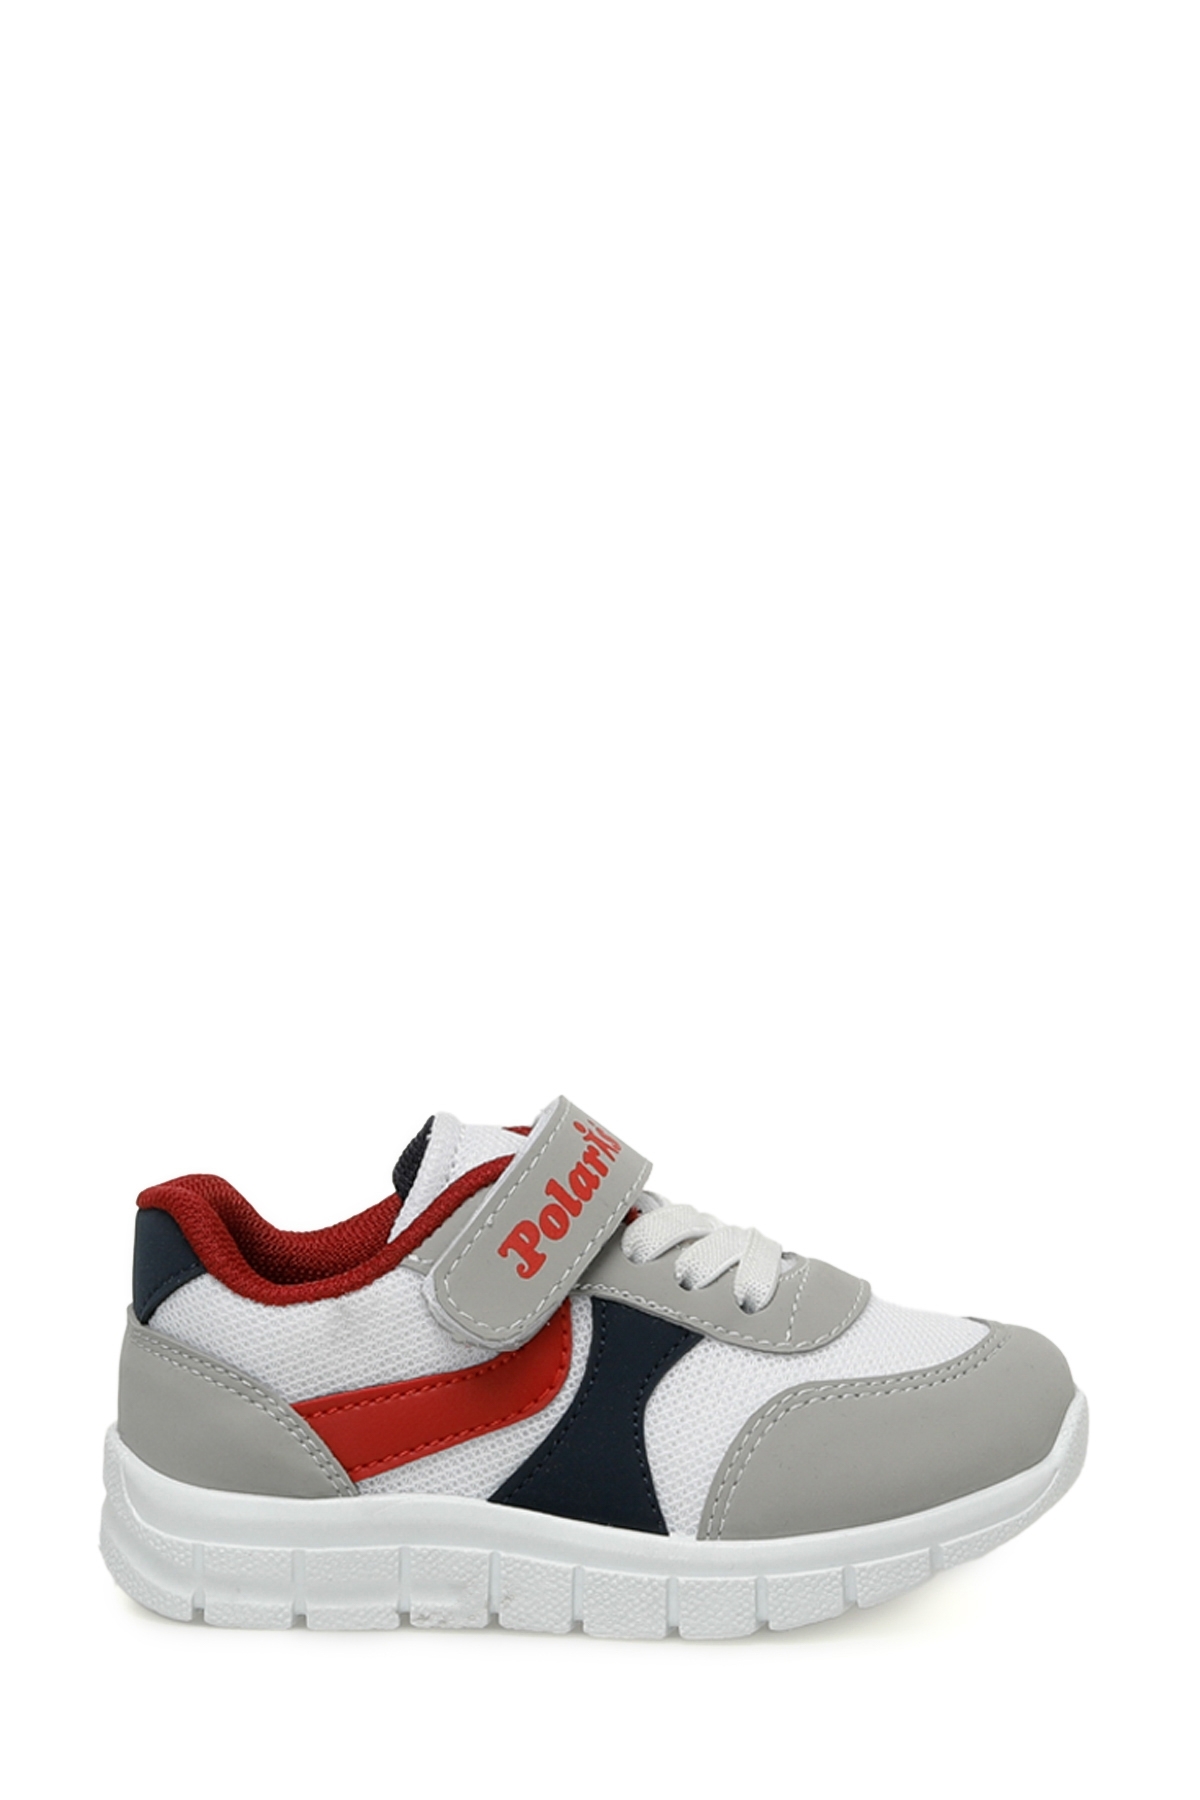 Levně Polaris MODRY 4FX Boys White Sneaker